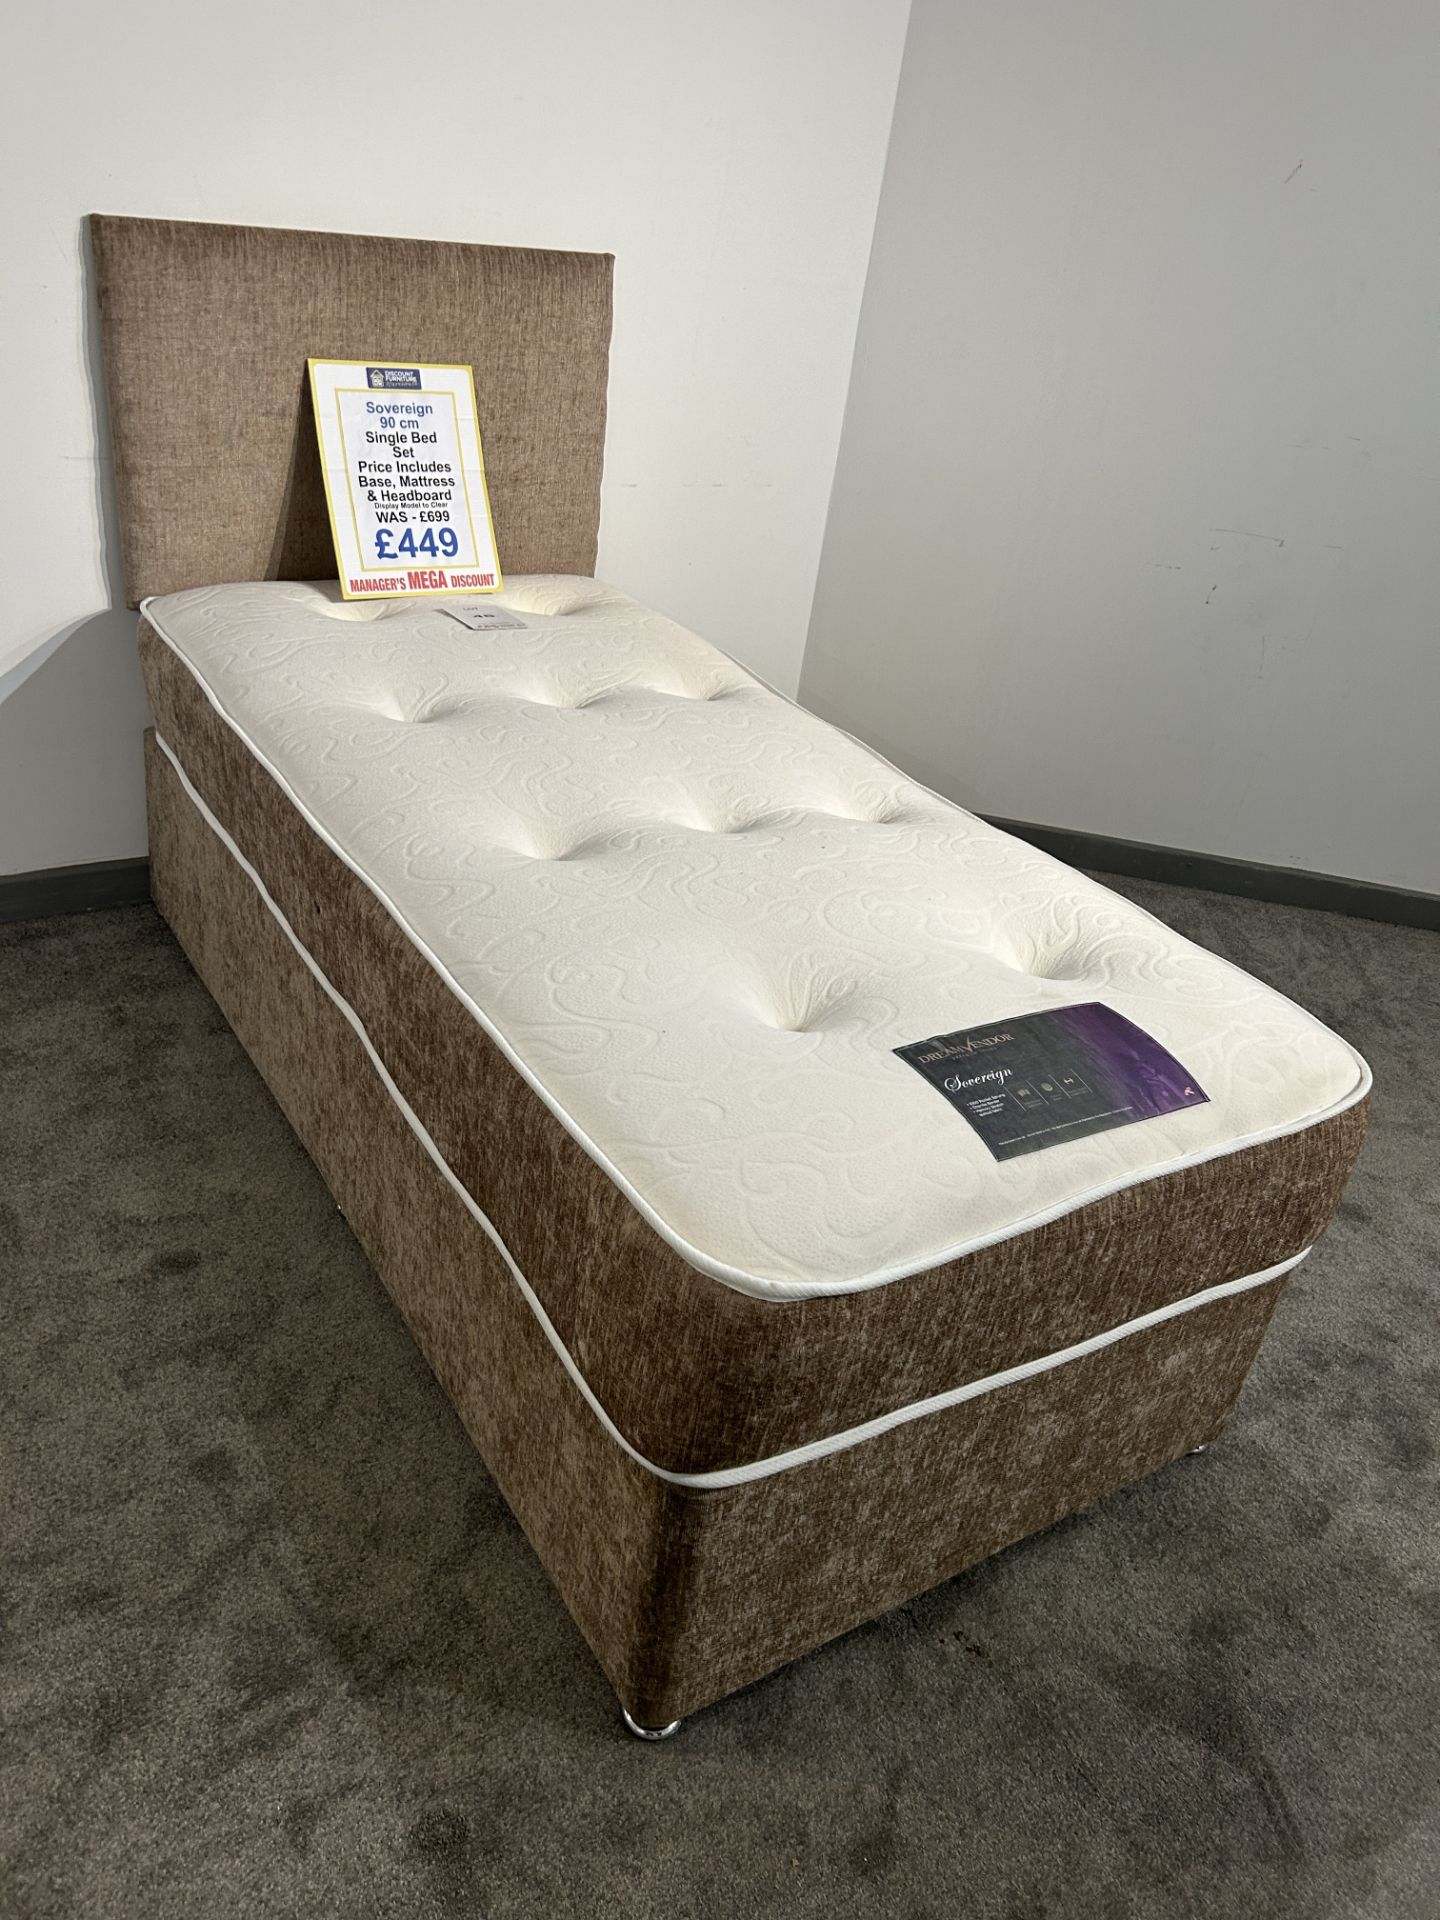 Ex-Display Single Size 2 Drawer Bed Set Incl: Dream Vendor Sovereign Mattress, Base & Headboard | RR - Image 3 of 4